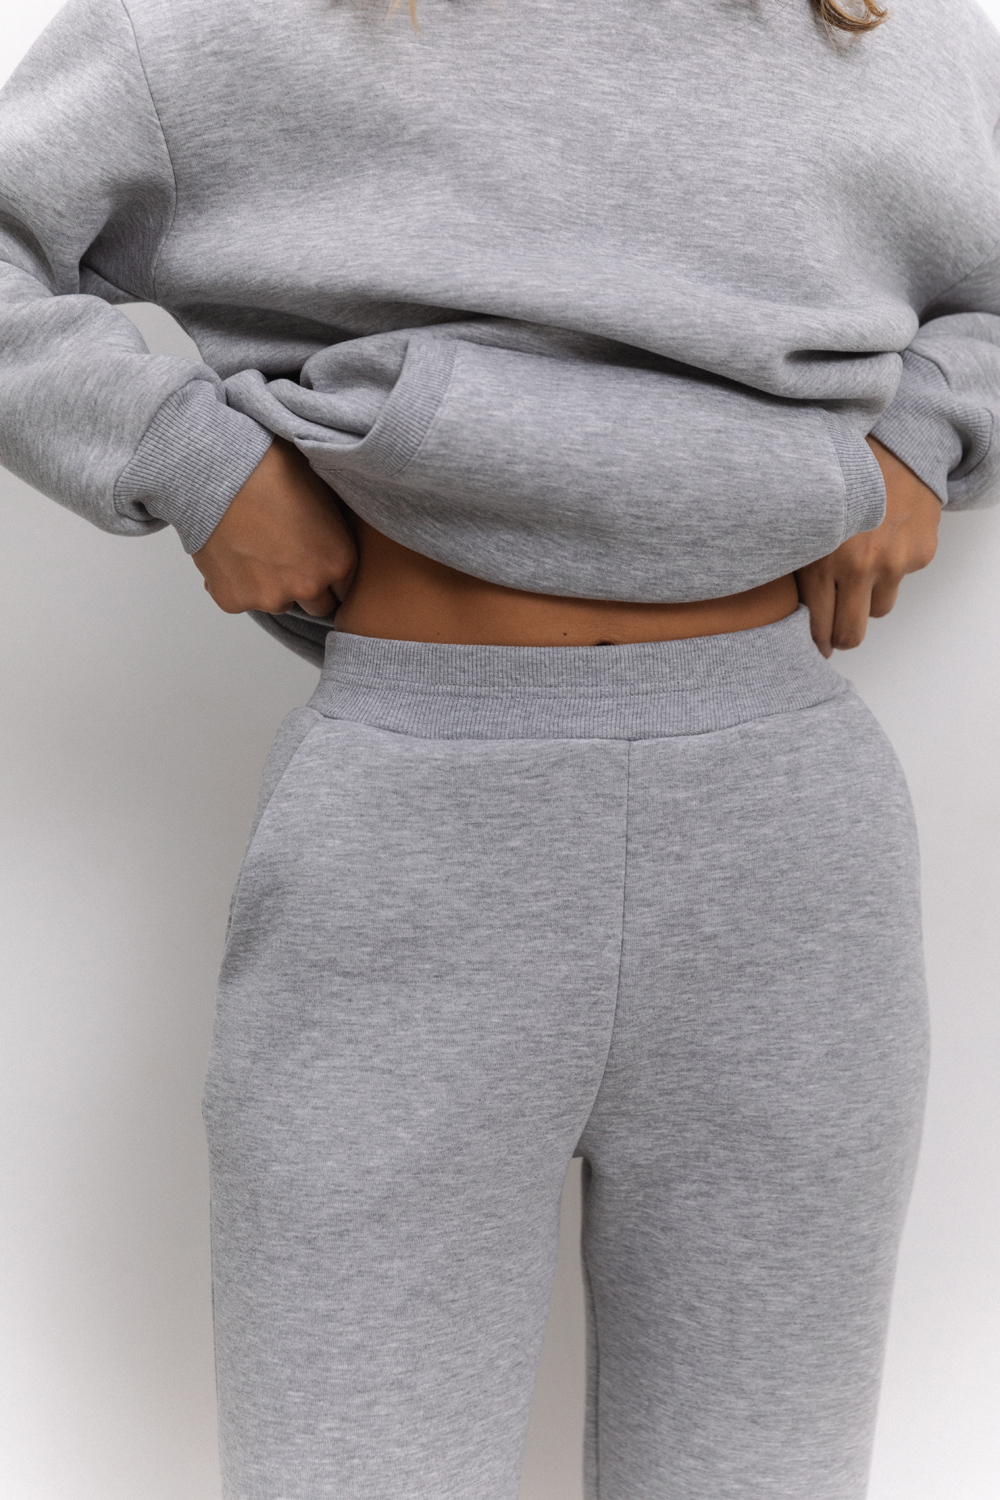 Gray warm sweatpants